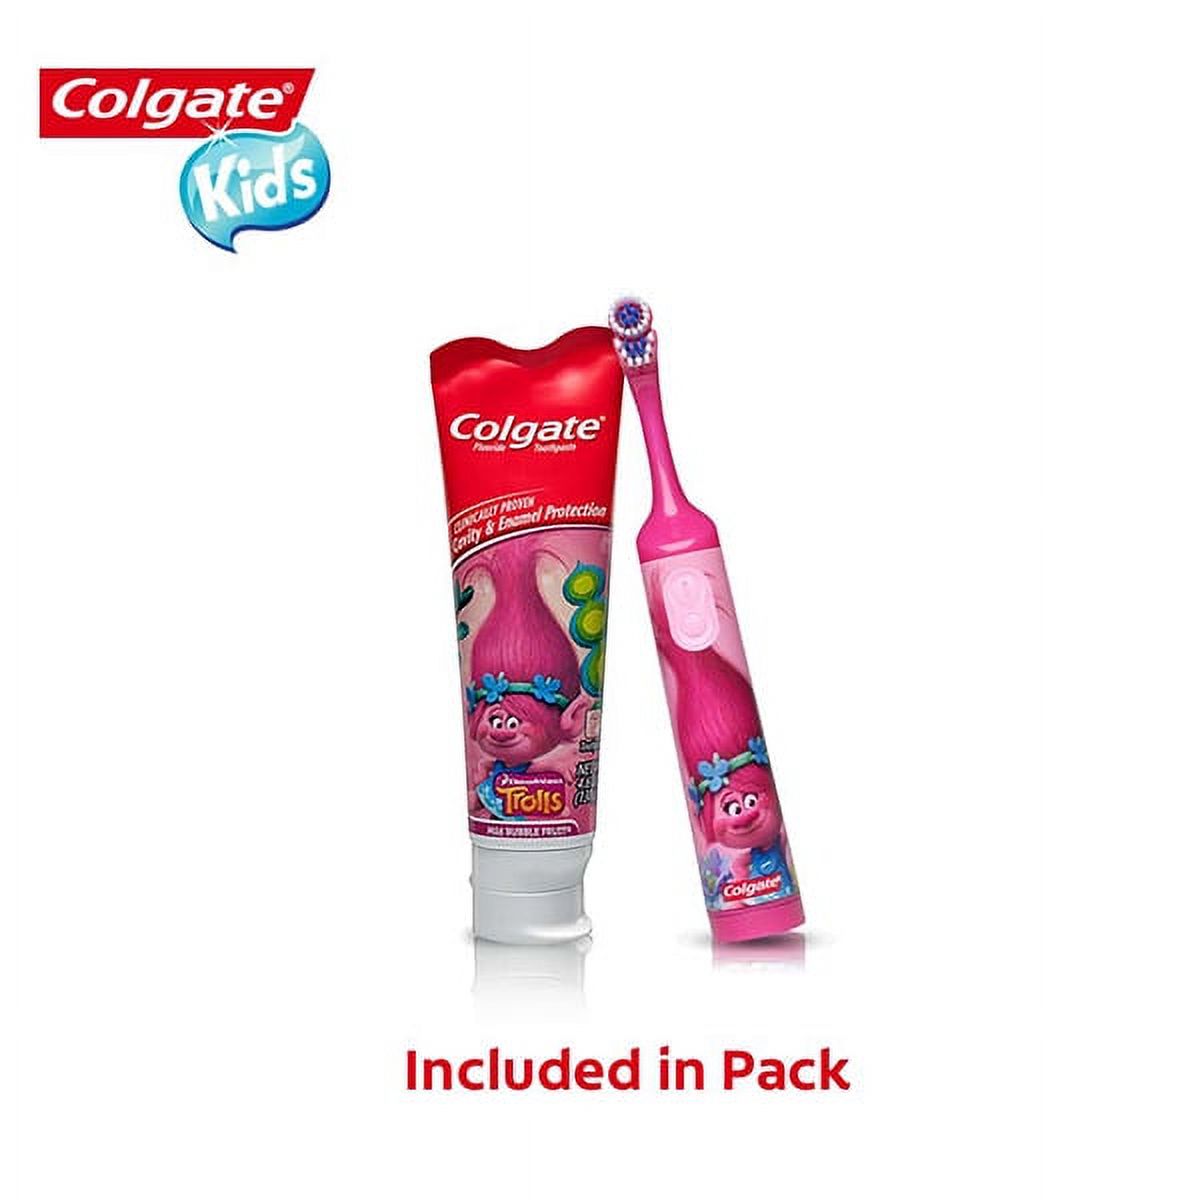 Colgate Kids Powered Toothbrush, Toothpaste Pack - Trolls - image 2 of 10